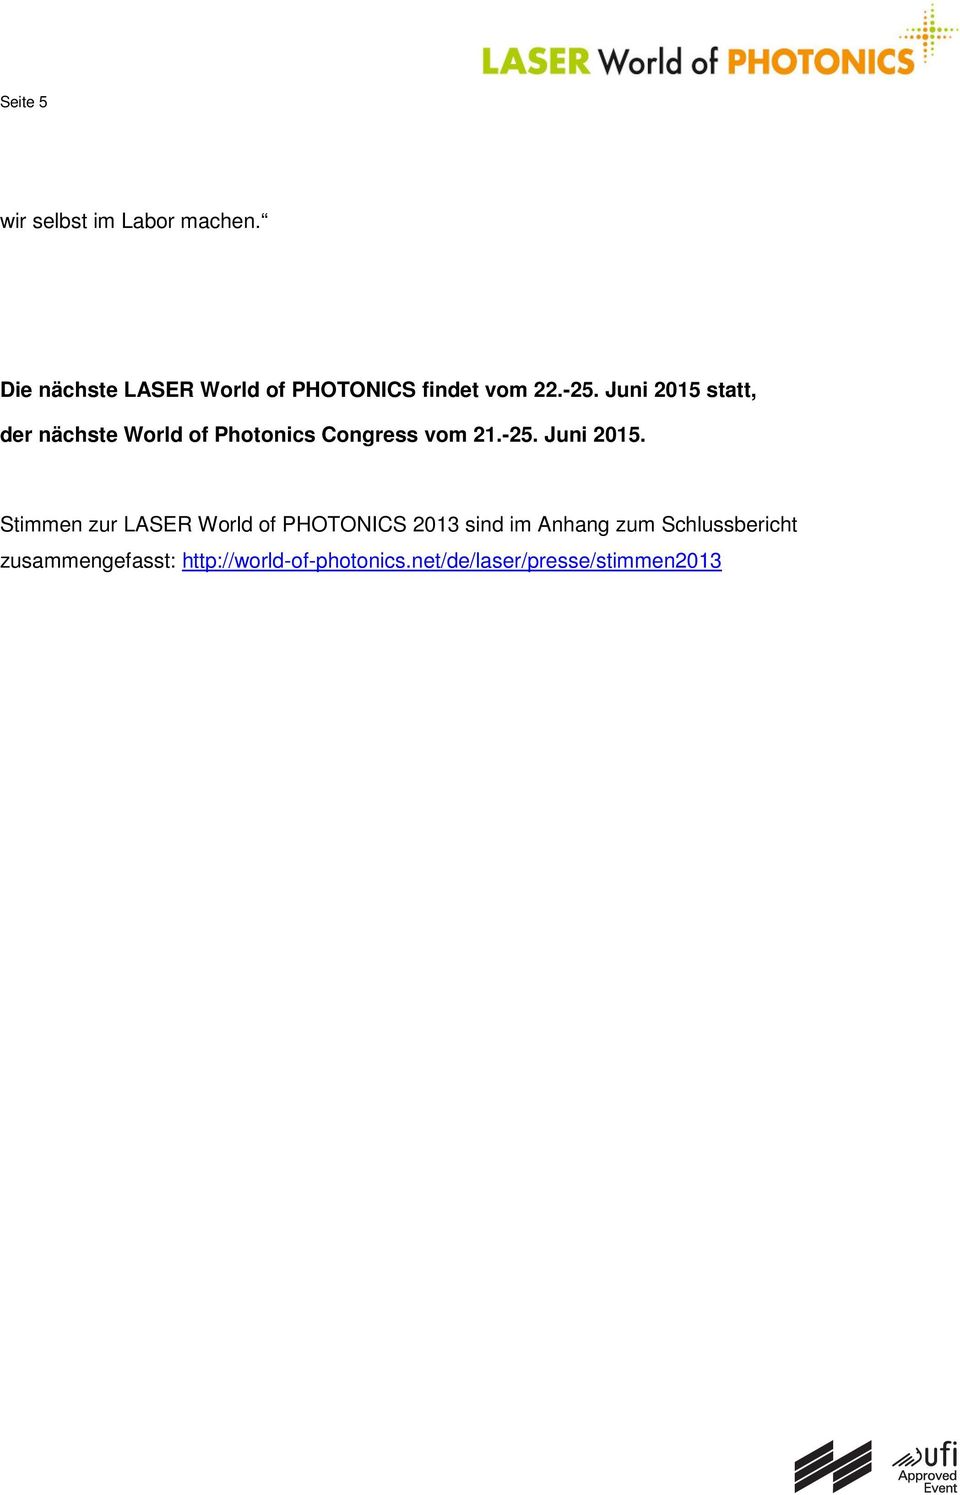 Juni 2015 statt, der nächste World of Photonics Congress vom 21.-25. Juni 2015.